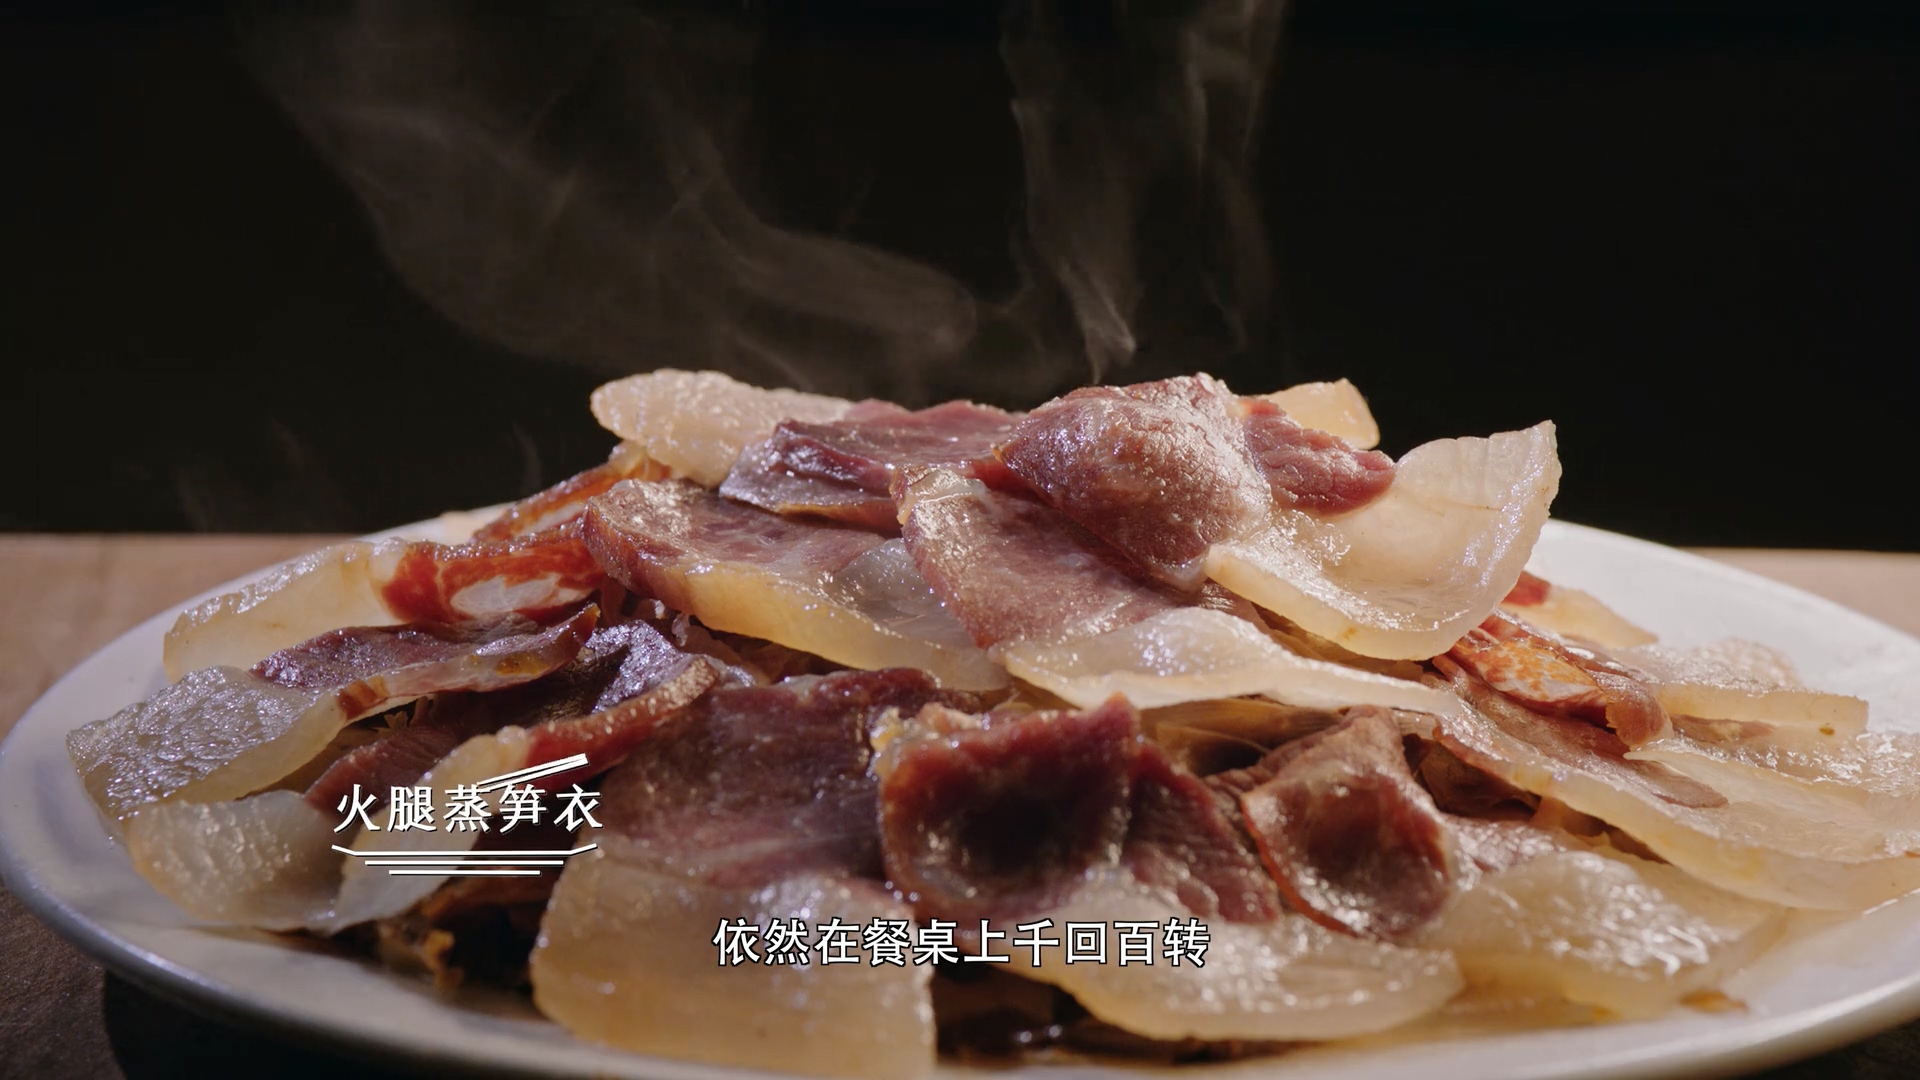 风味人间/Once upon a bite / Savouring China【2018】【纪录片】【更新至EP01】【WEB-1080P-无水印】